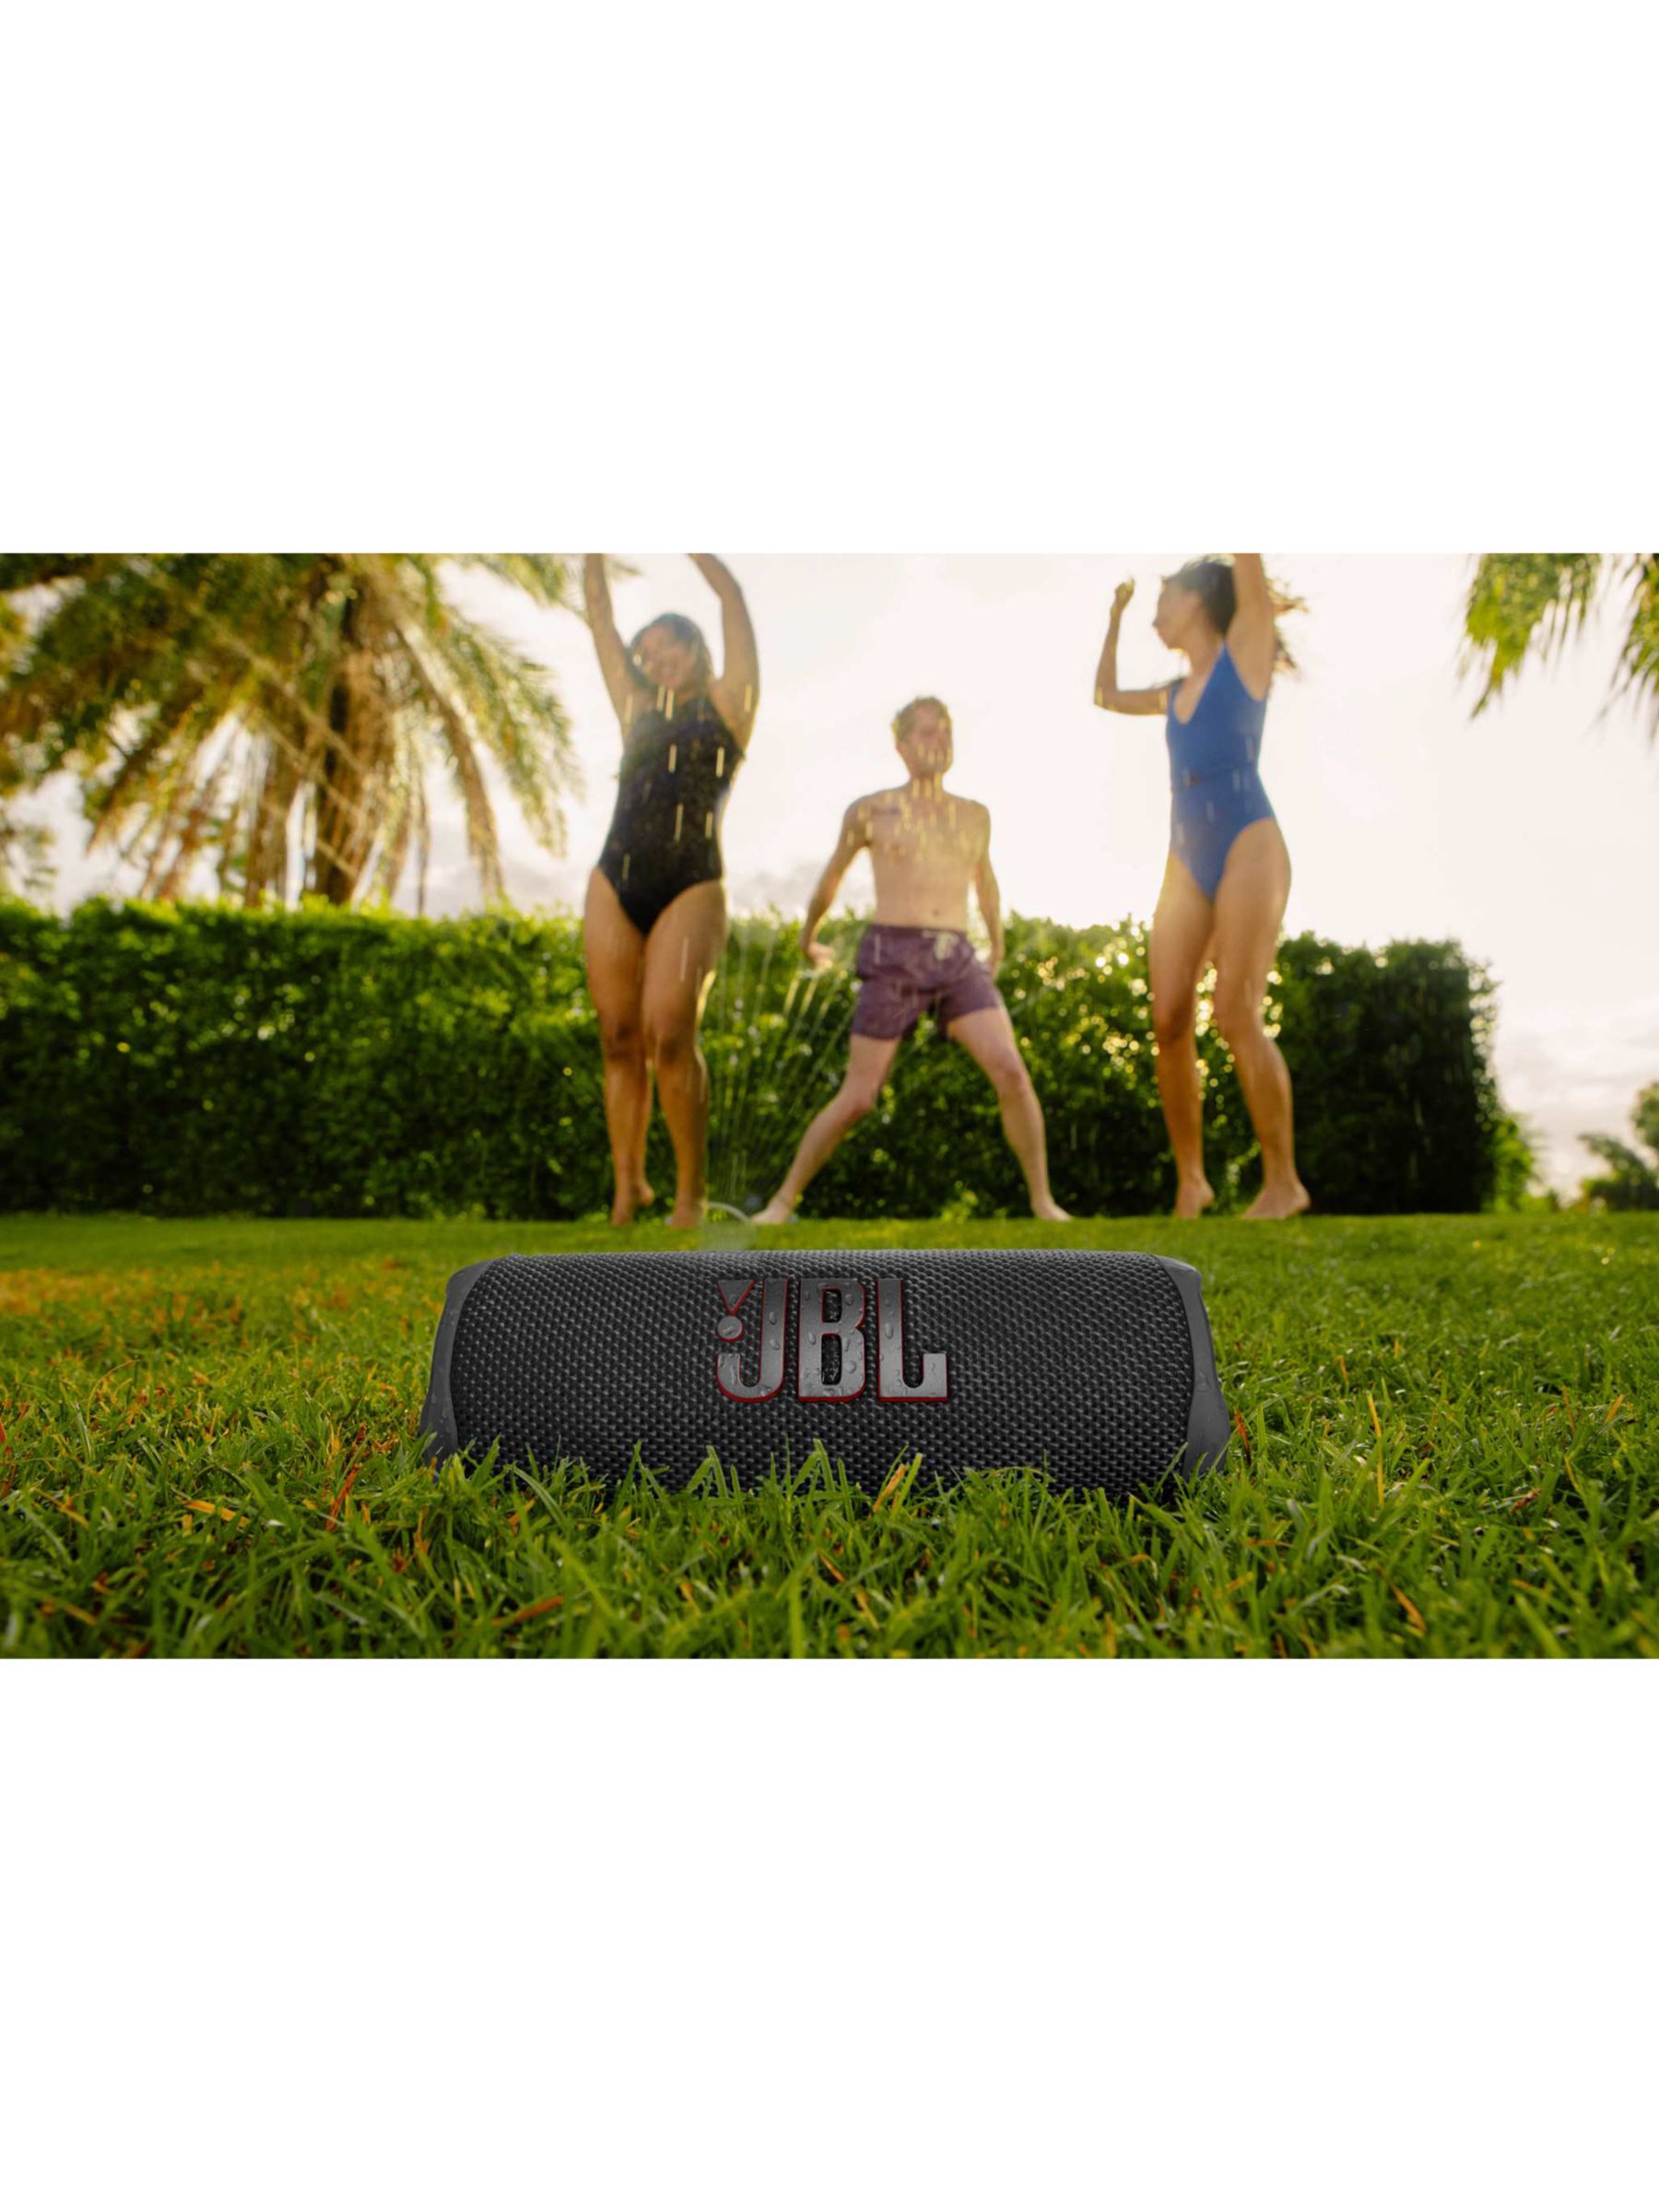 JBL Flip 6 (Red) Waterproof portable Bluetooth® speaker at Crutchfield